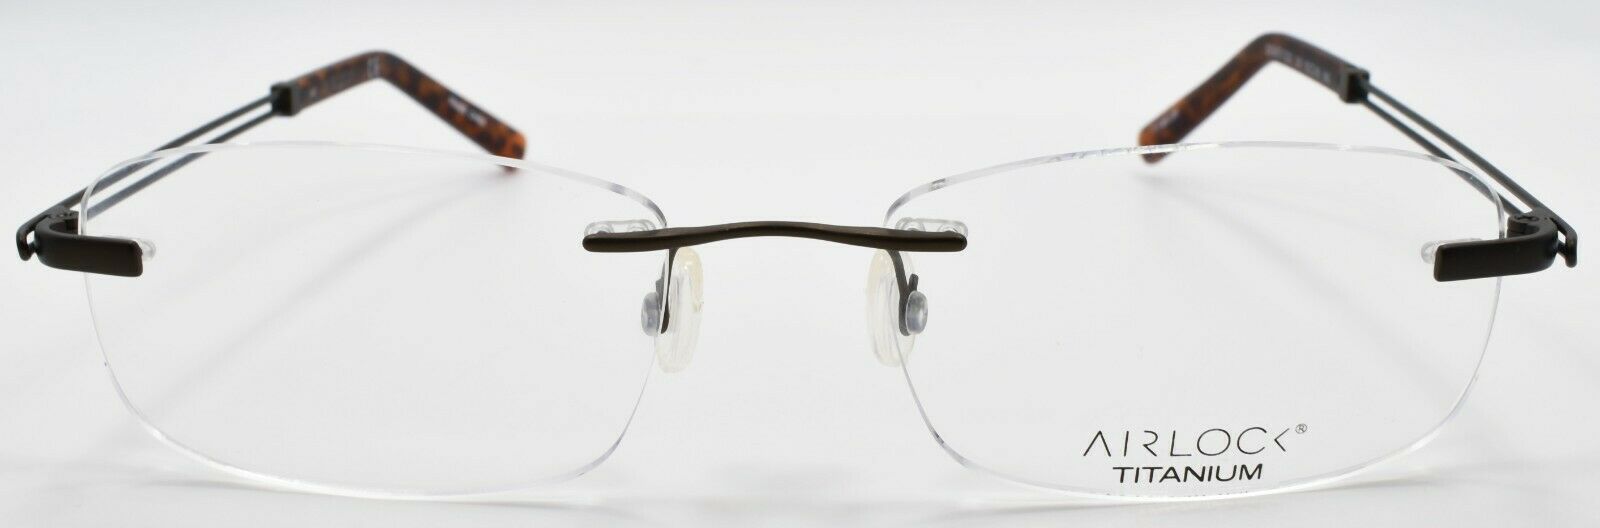 2-Airlock Dignity 203 301 Men's Eyeglasses Frames Rimless 53-18-140 Dark Olive-886895380072-IKSpecs